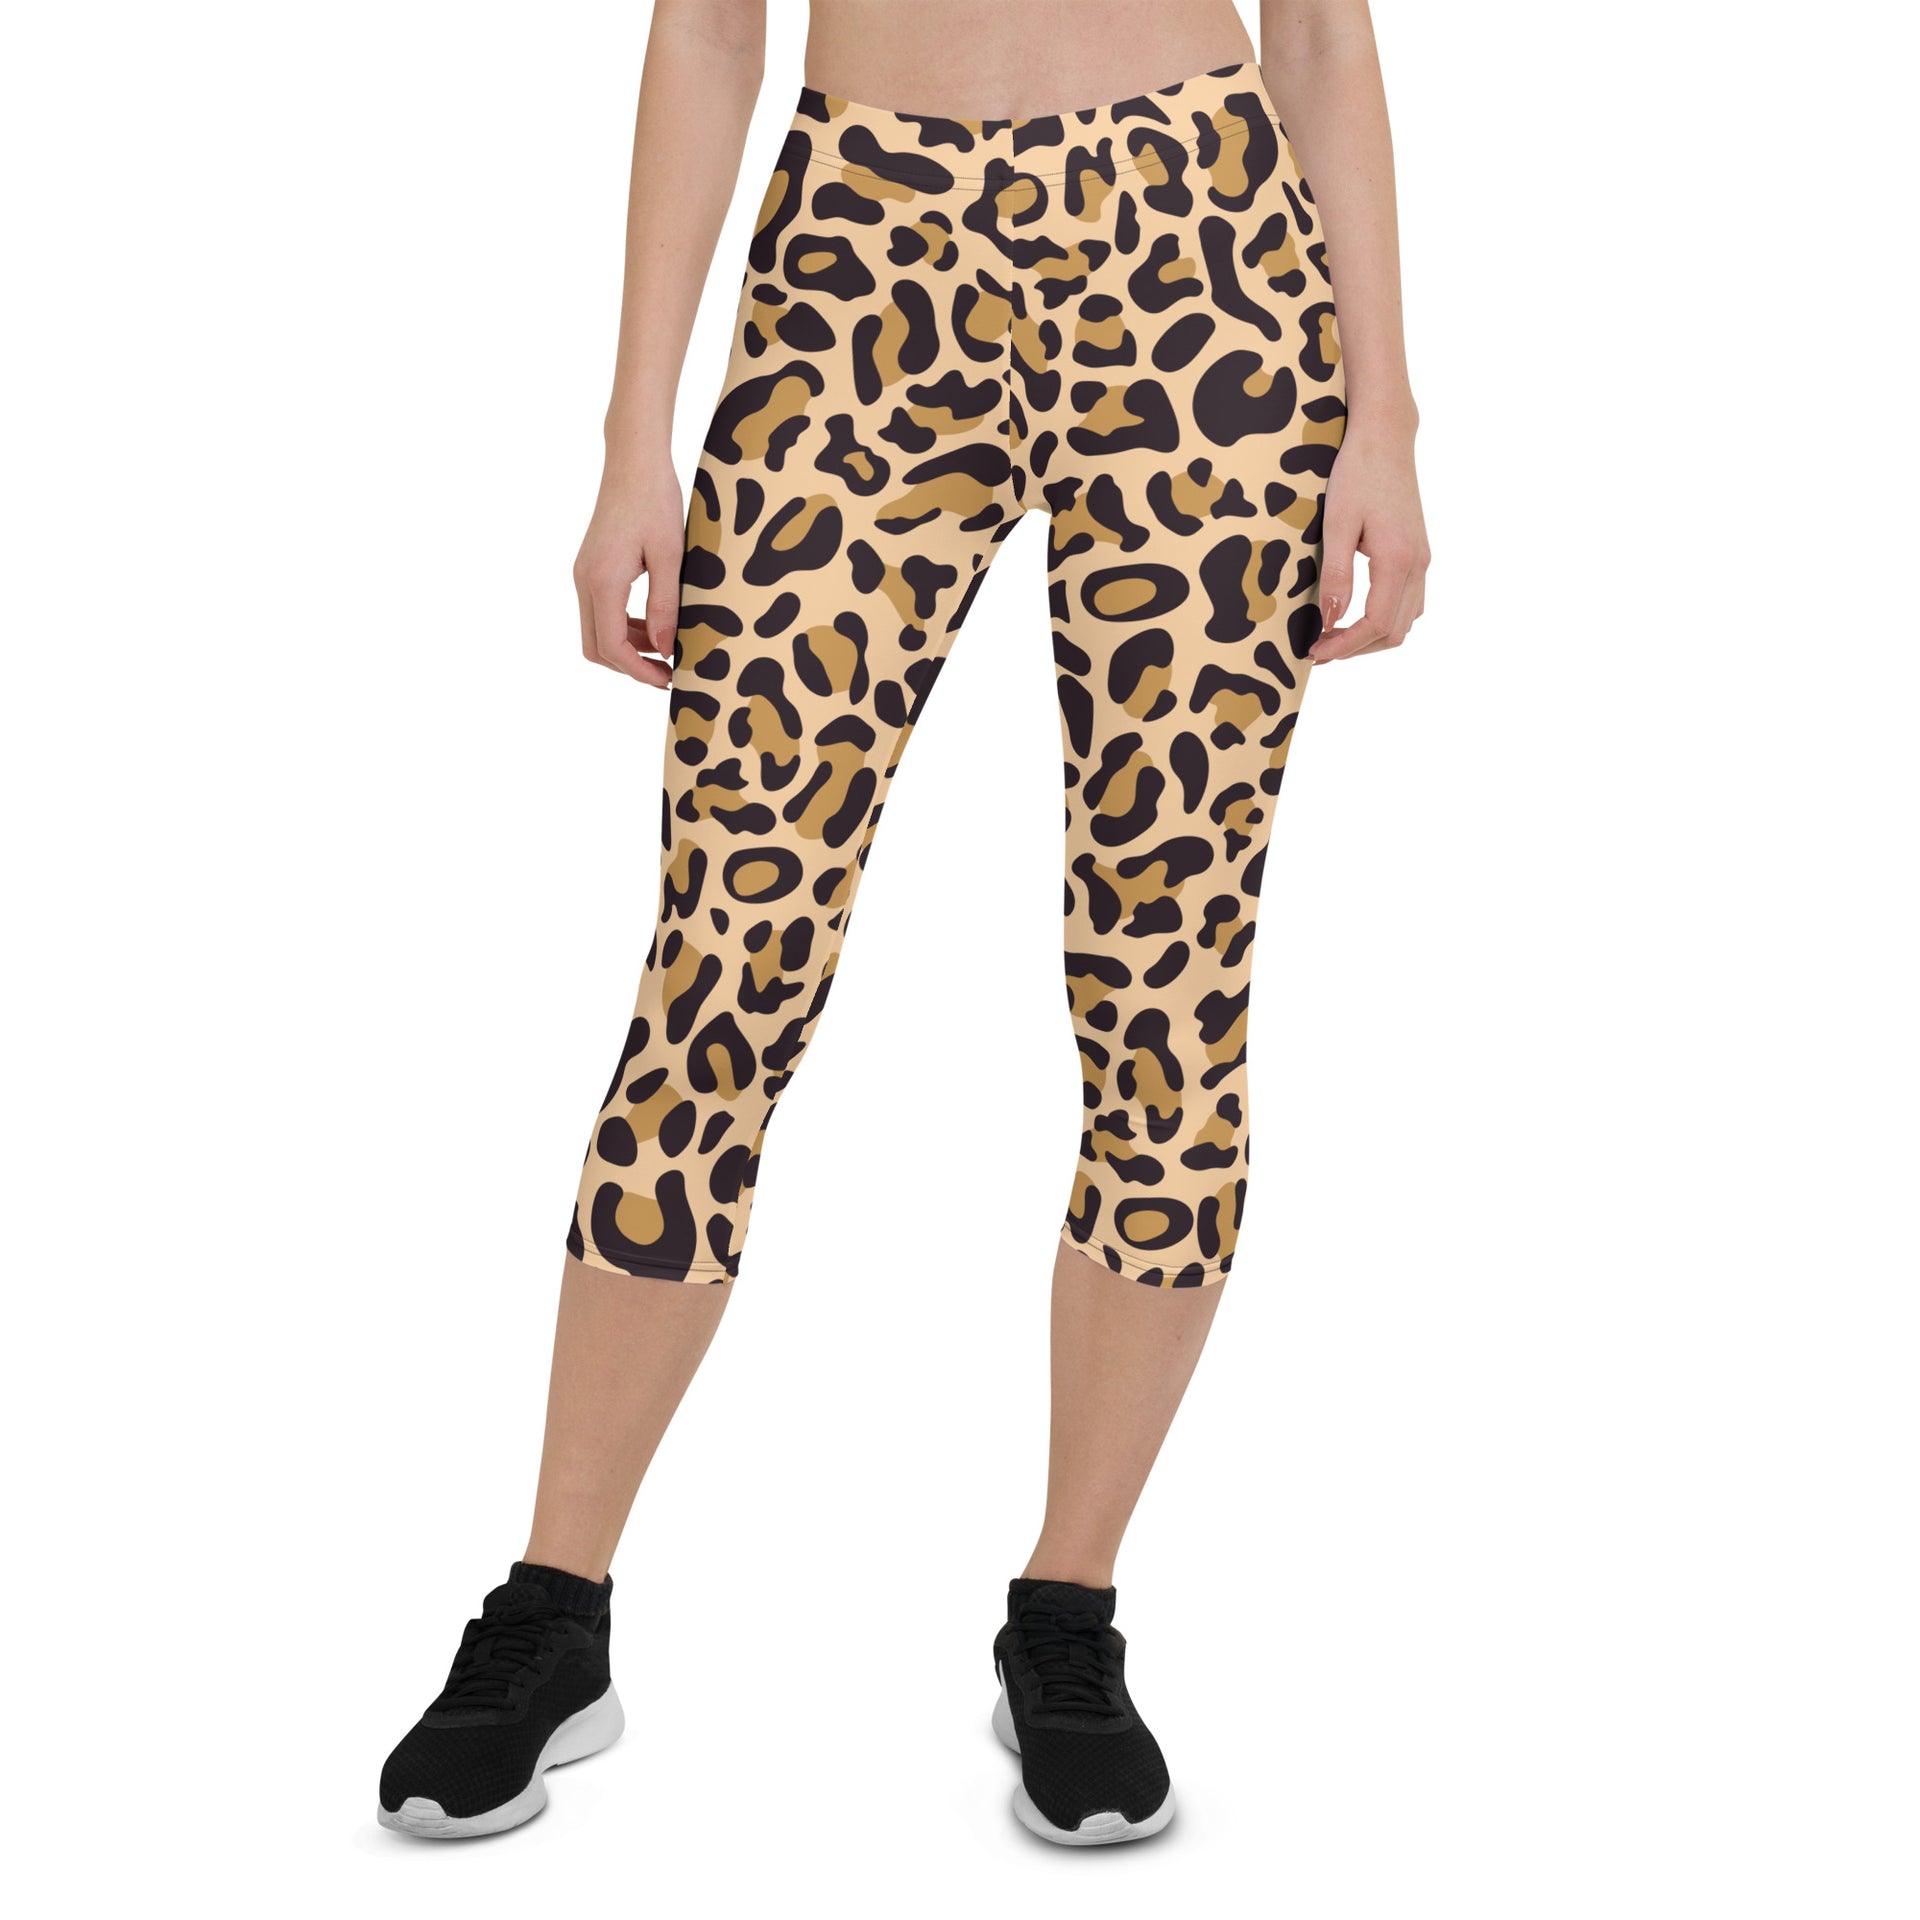 Women's Active Cheetah Animal Print Workout Capri Leggings, Black